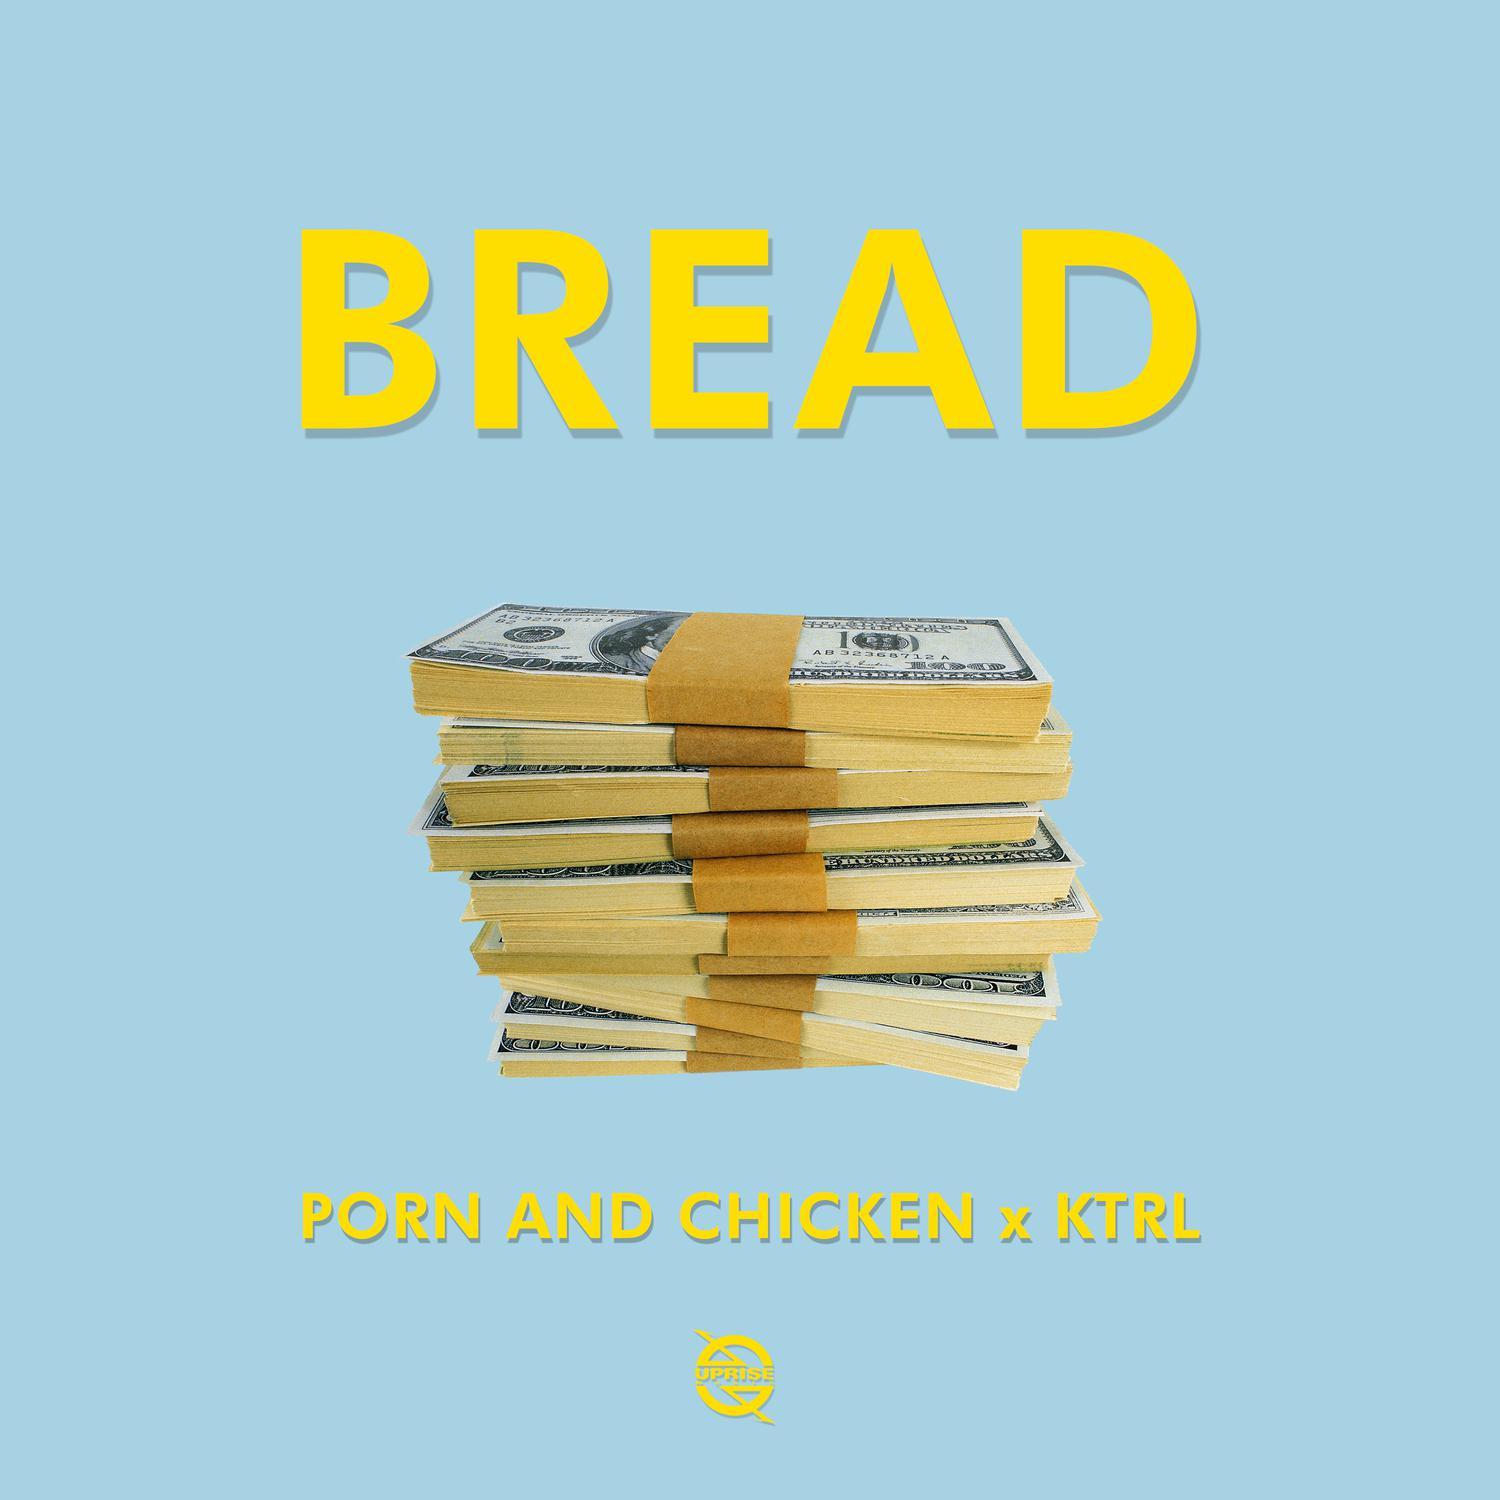 Porn And Chicken - Bread